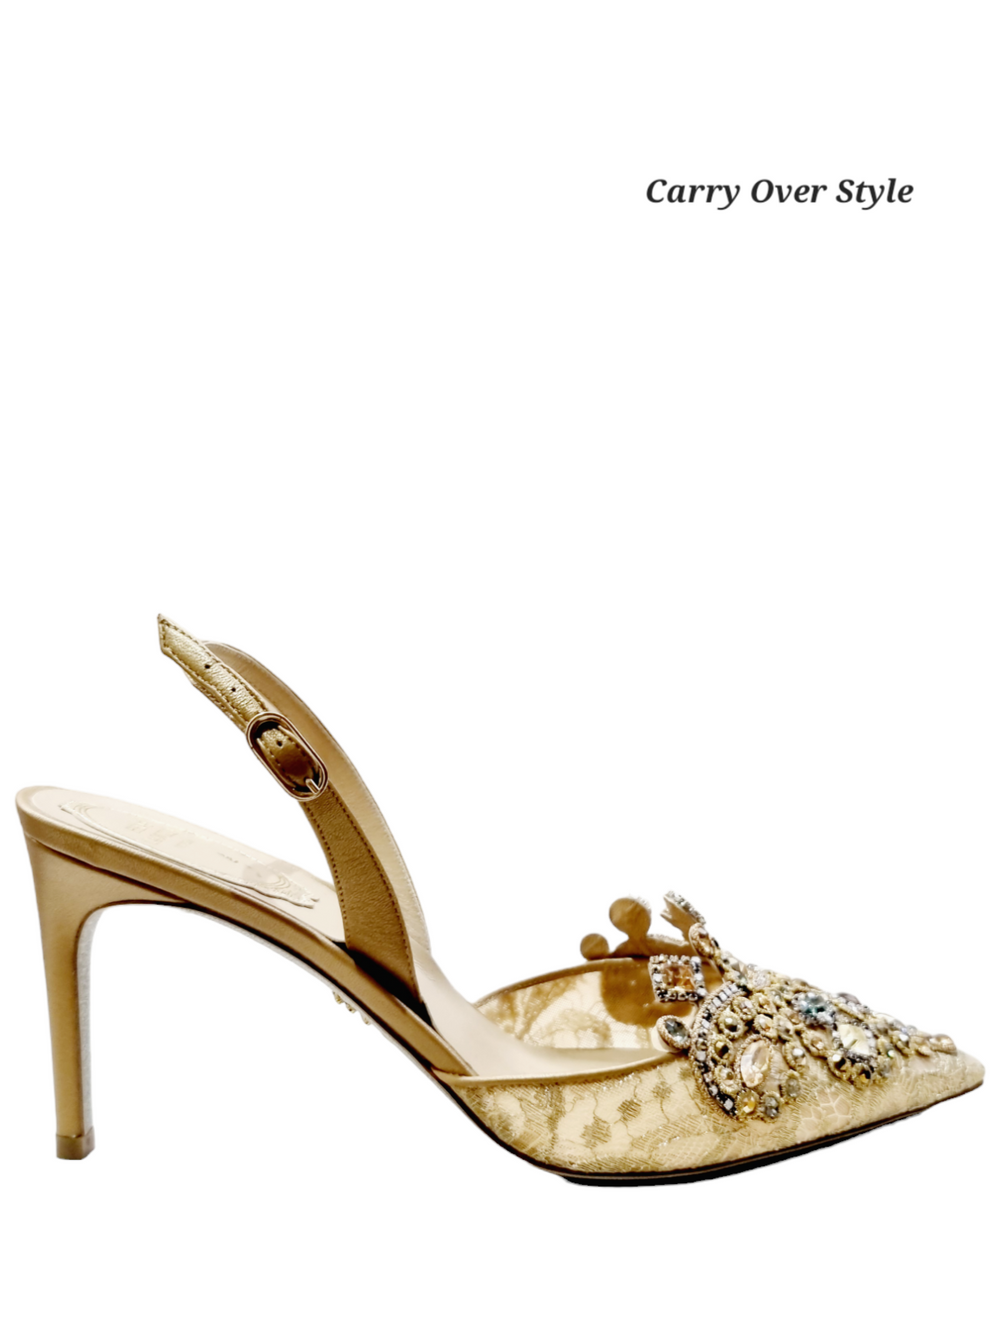 Veneziana Gold Lace Slingback Pumps - Rene Caovilla - Liberty Shoes Australia